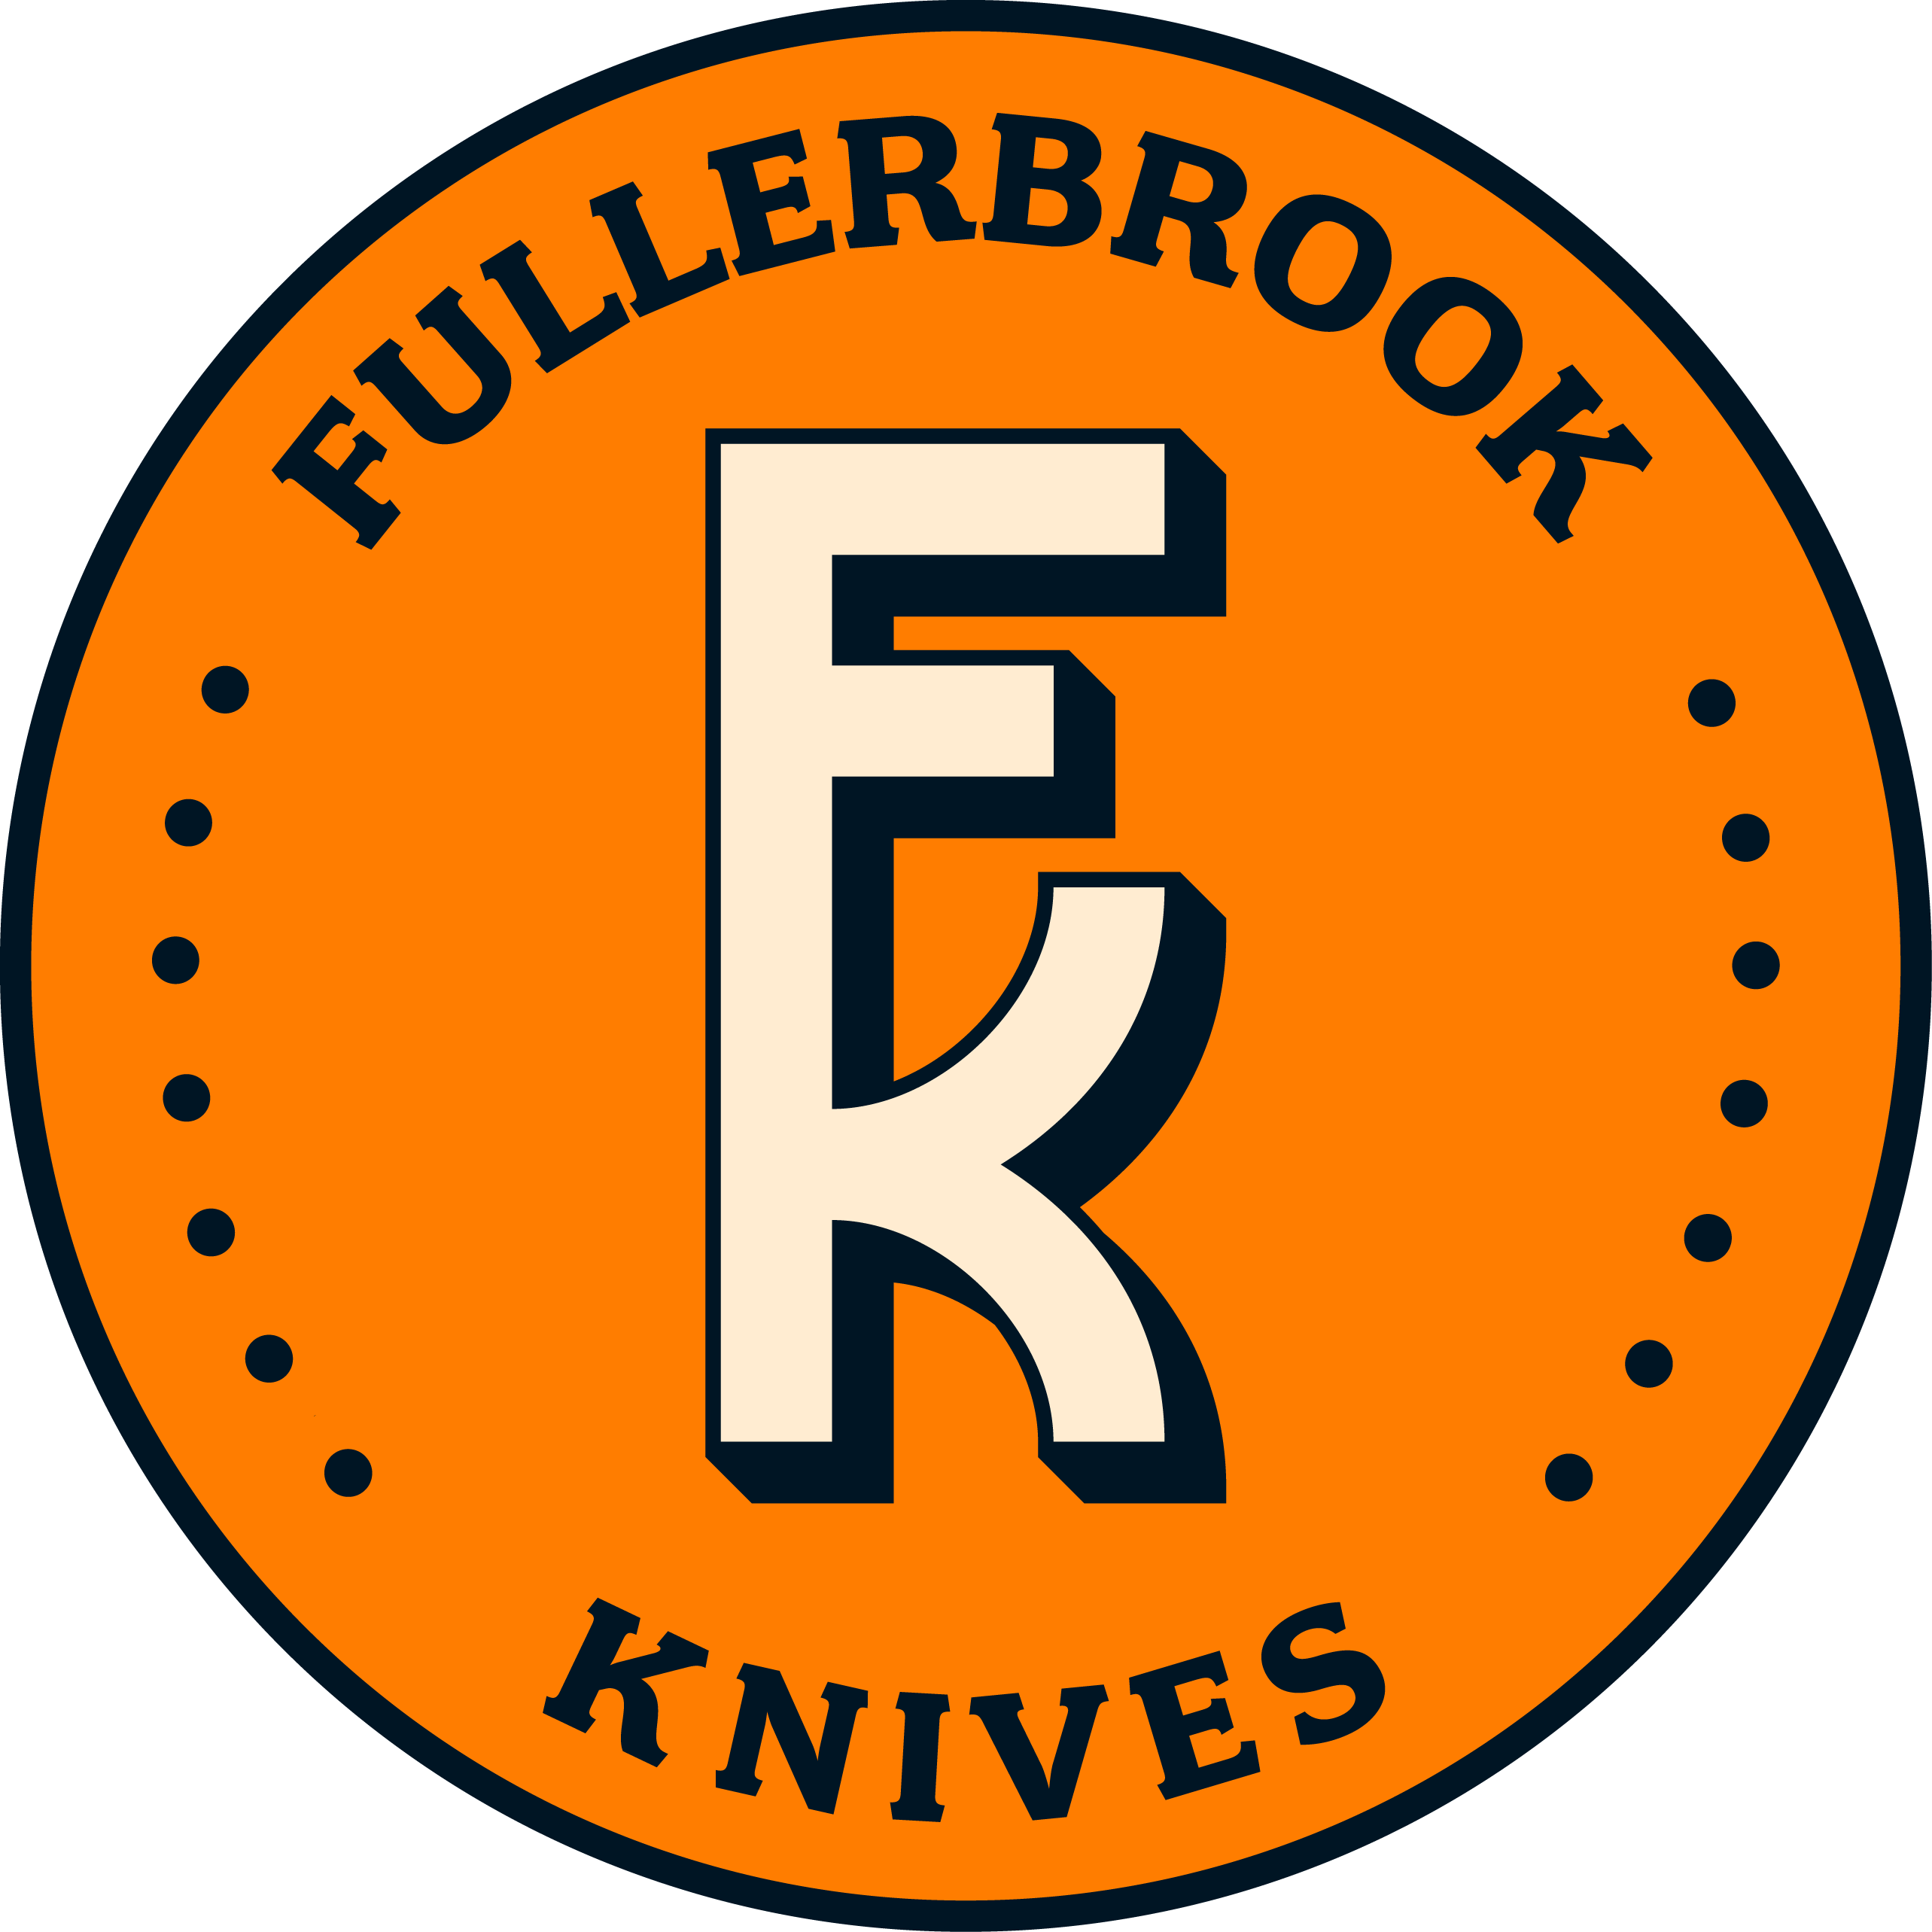 Fullerbrookknives